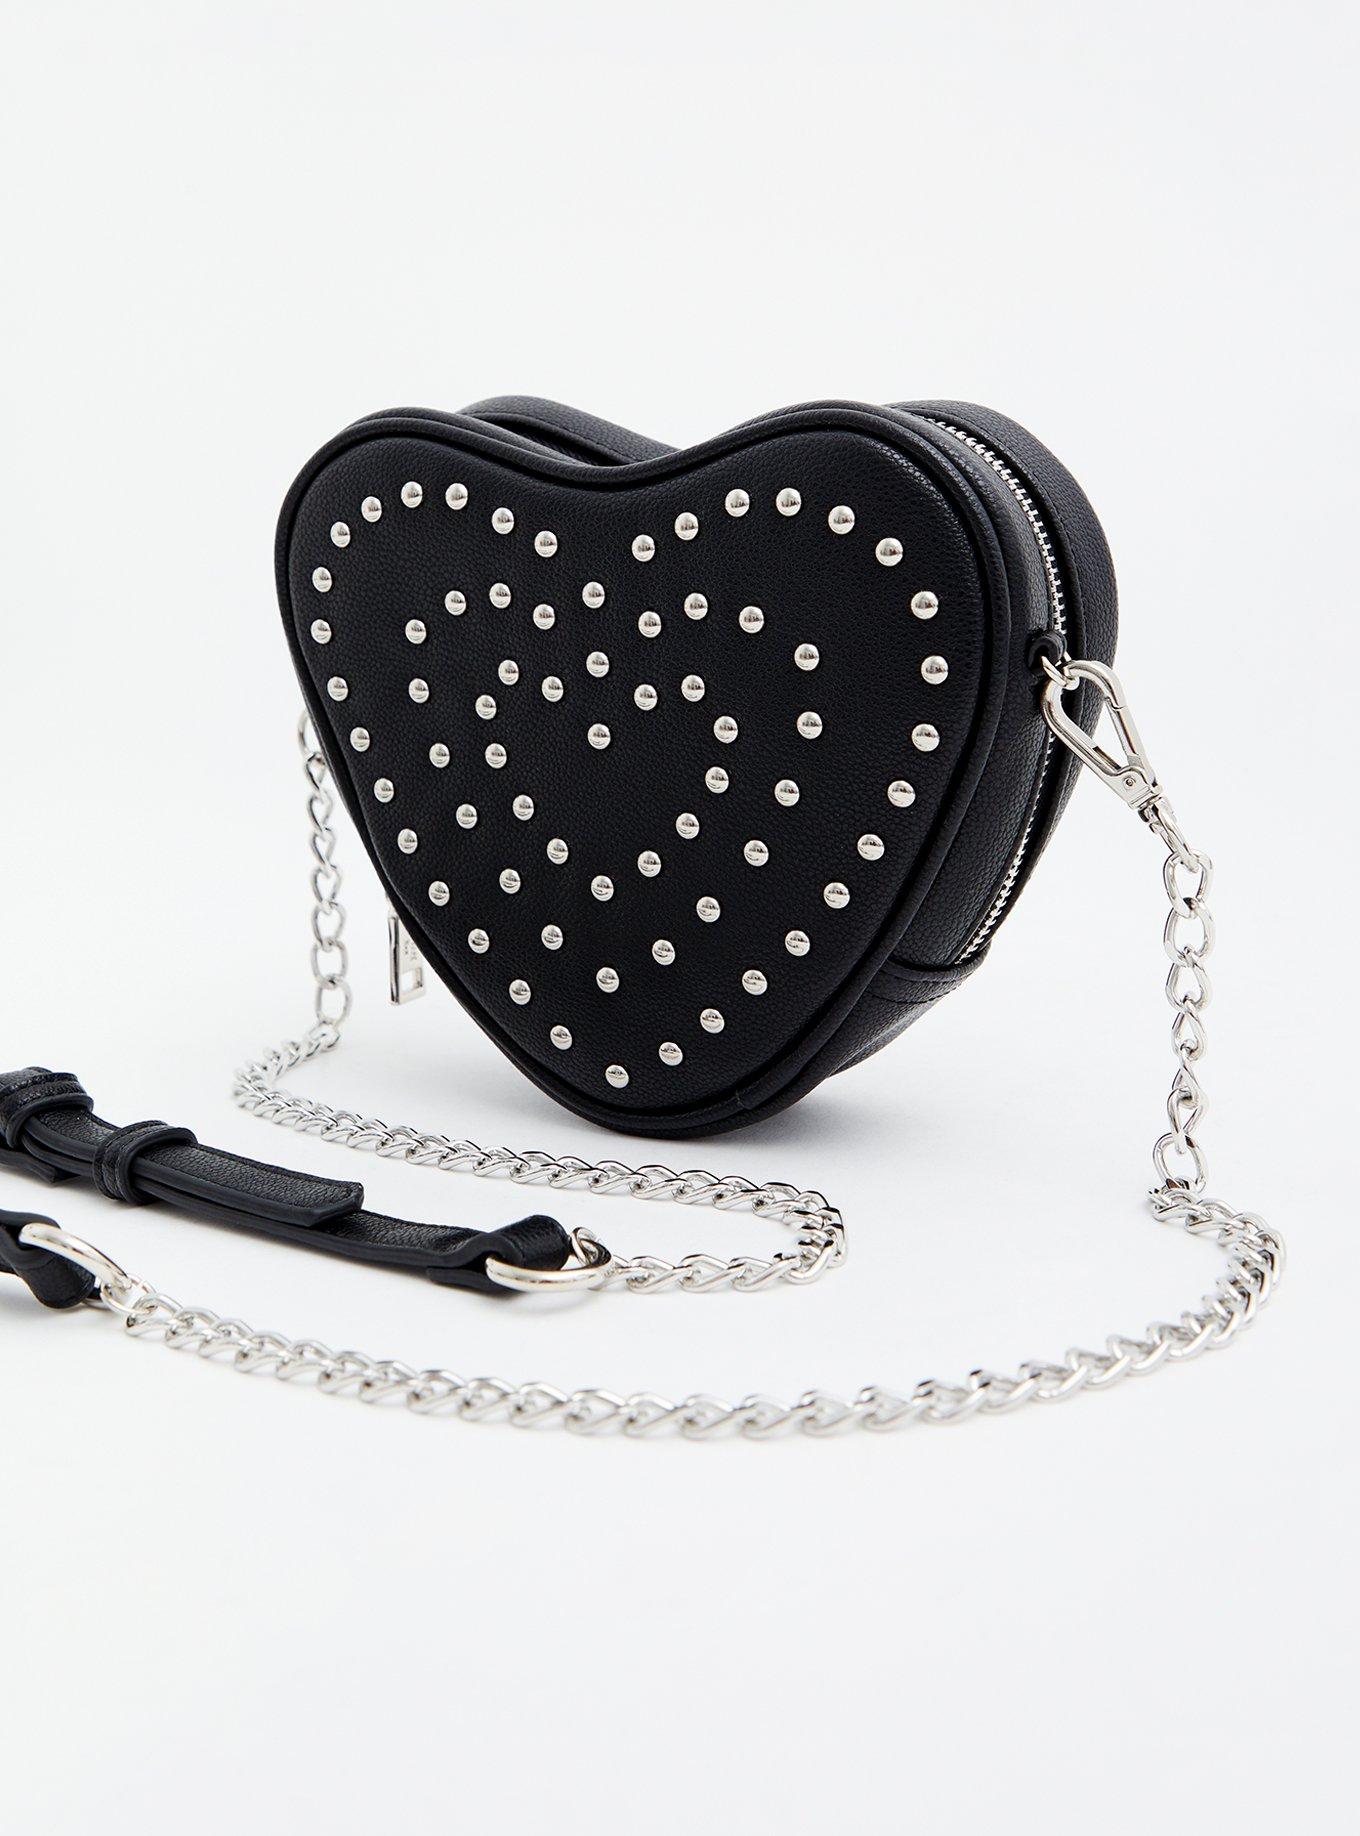 Plus Size - Betsey Johnson Black Faux Leather Studded Heart Crossbody Bag -  Torrid